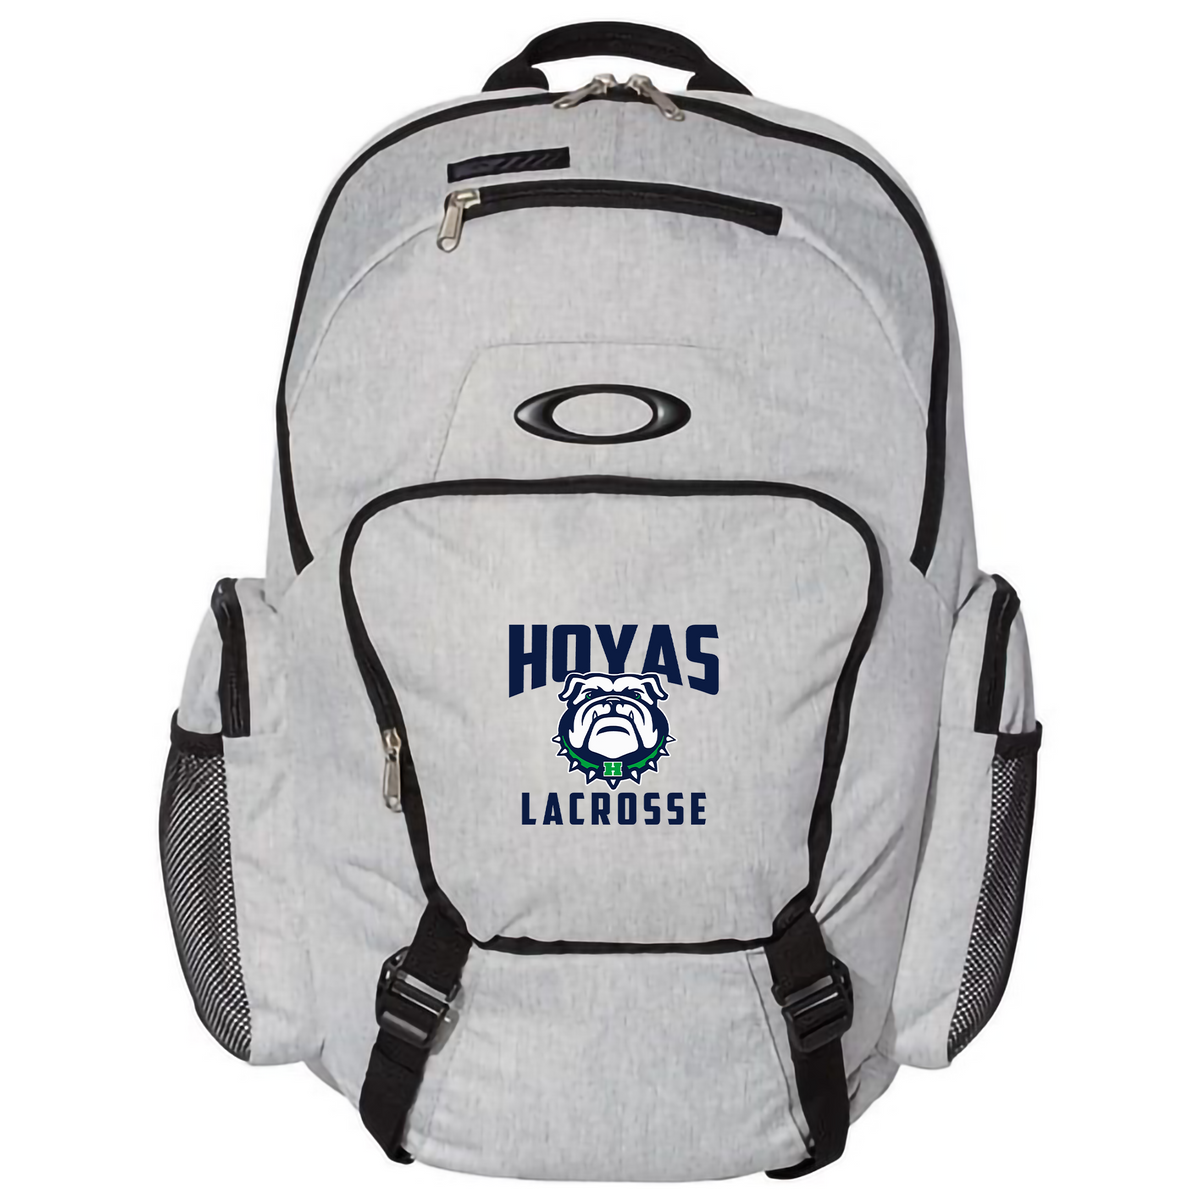 Collections Hoya Lacrosse Oakley Blade Backpack